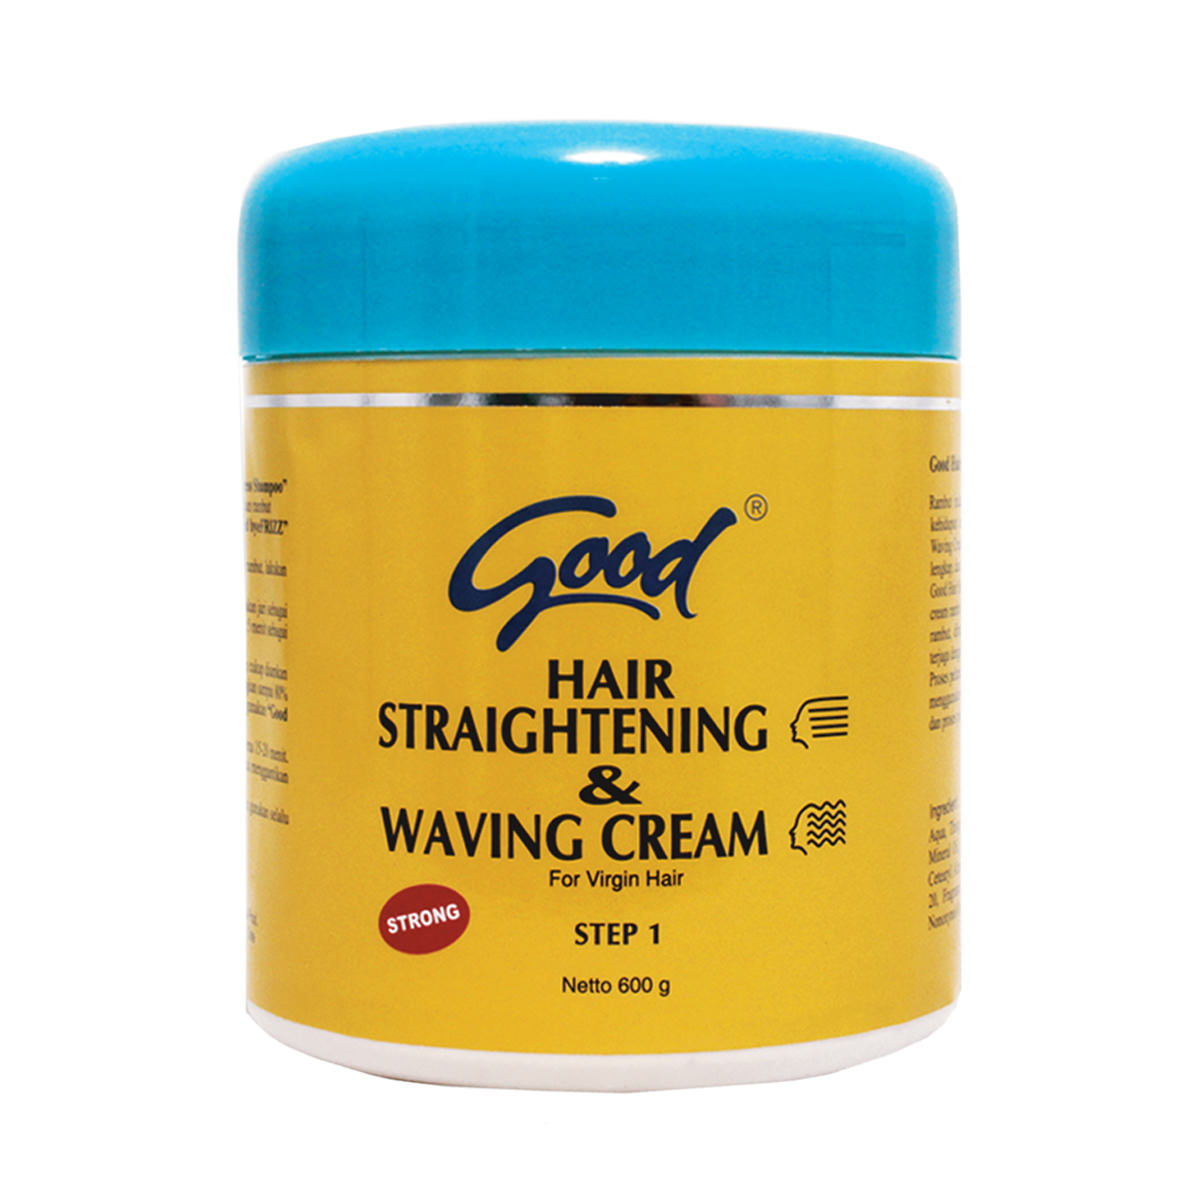 Good-Hair-Straightening-Waving-Cream-Strong-sfw(1)